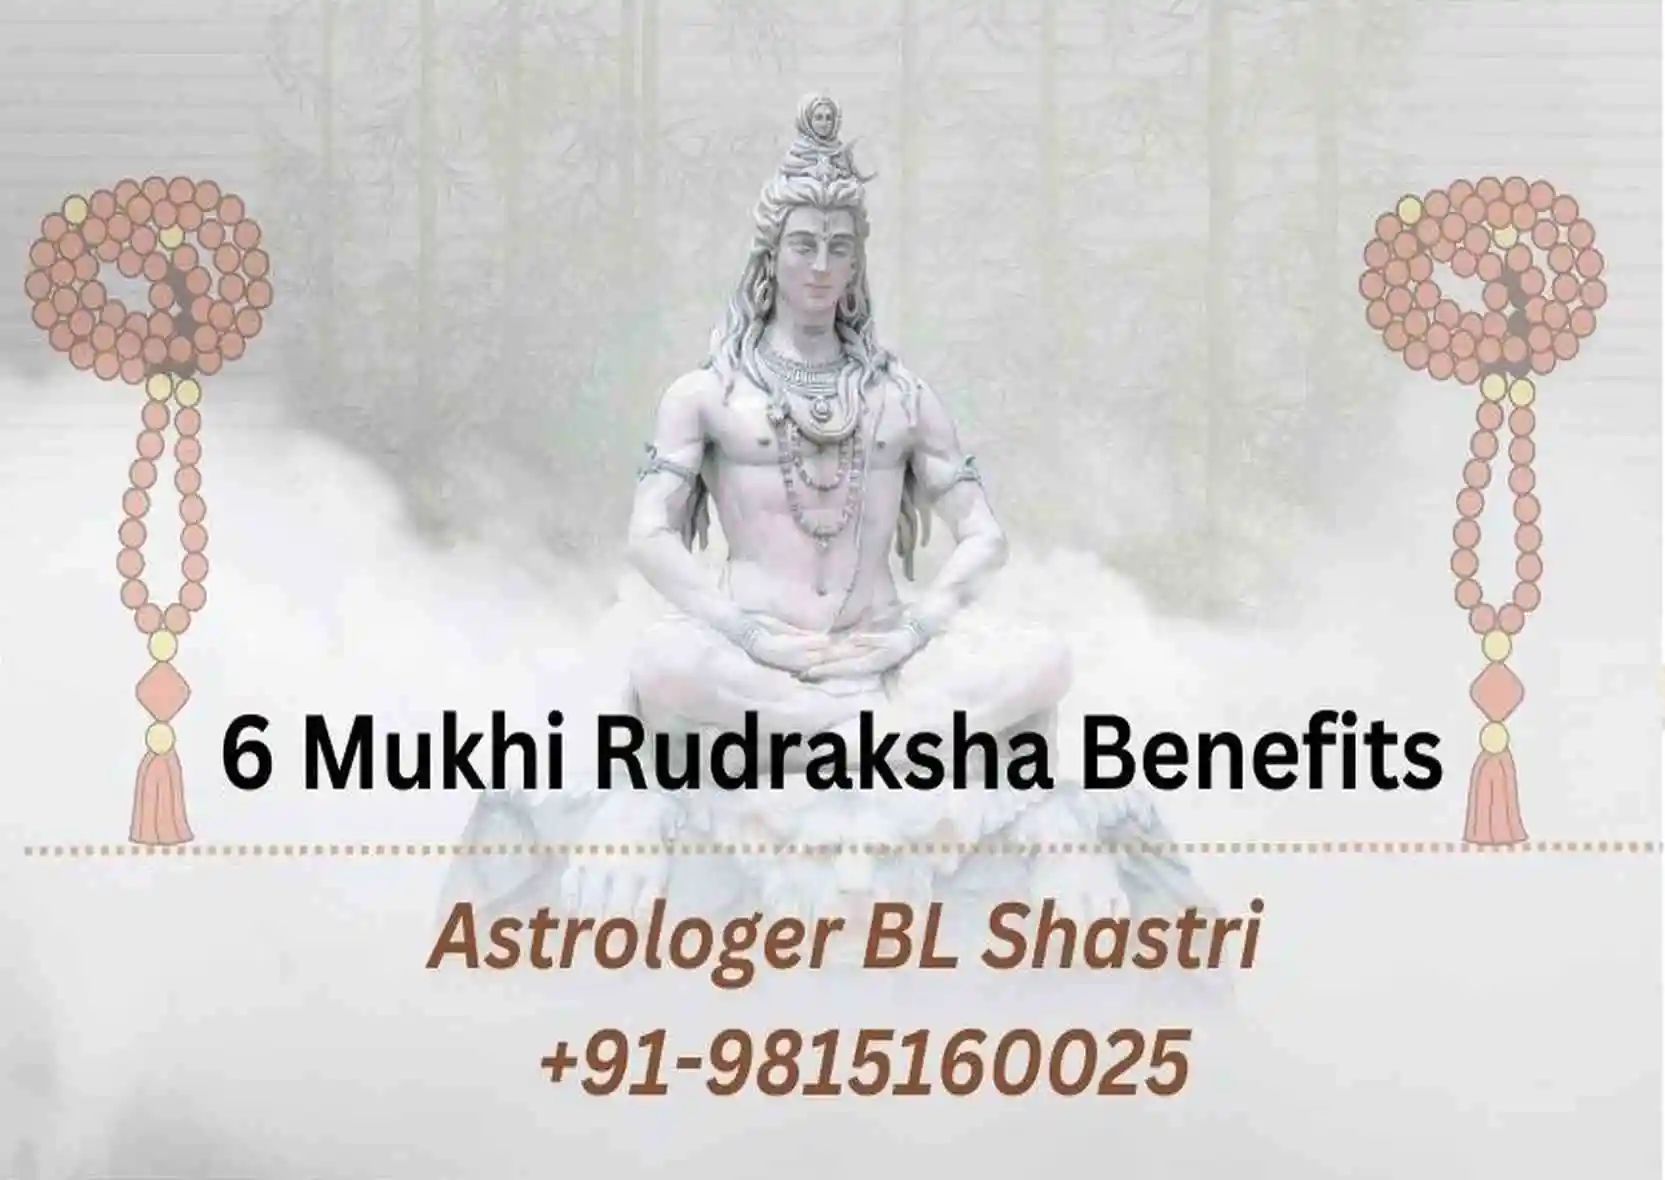 6 Mukhi Rudraksha Benefits